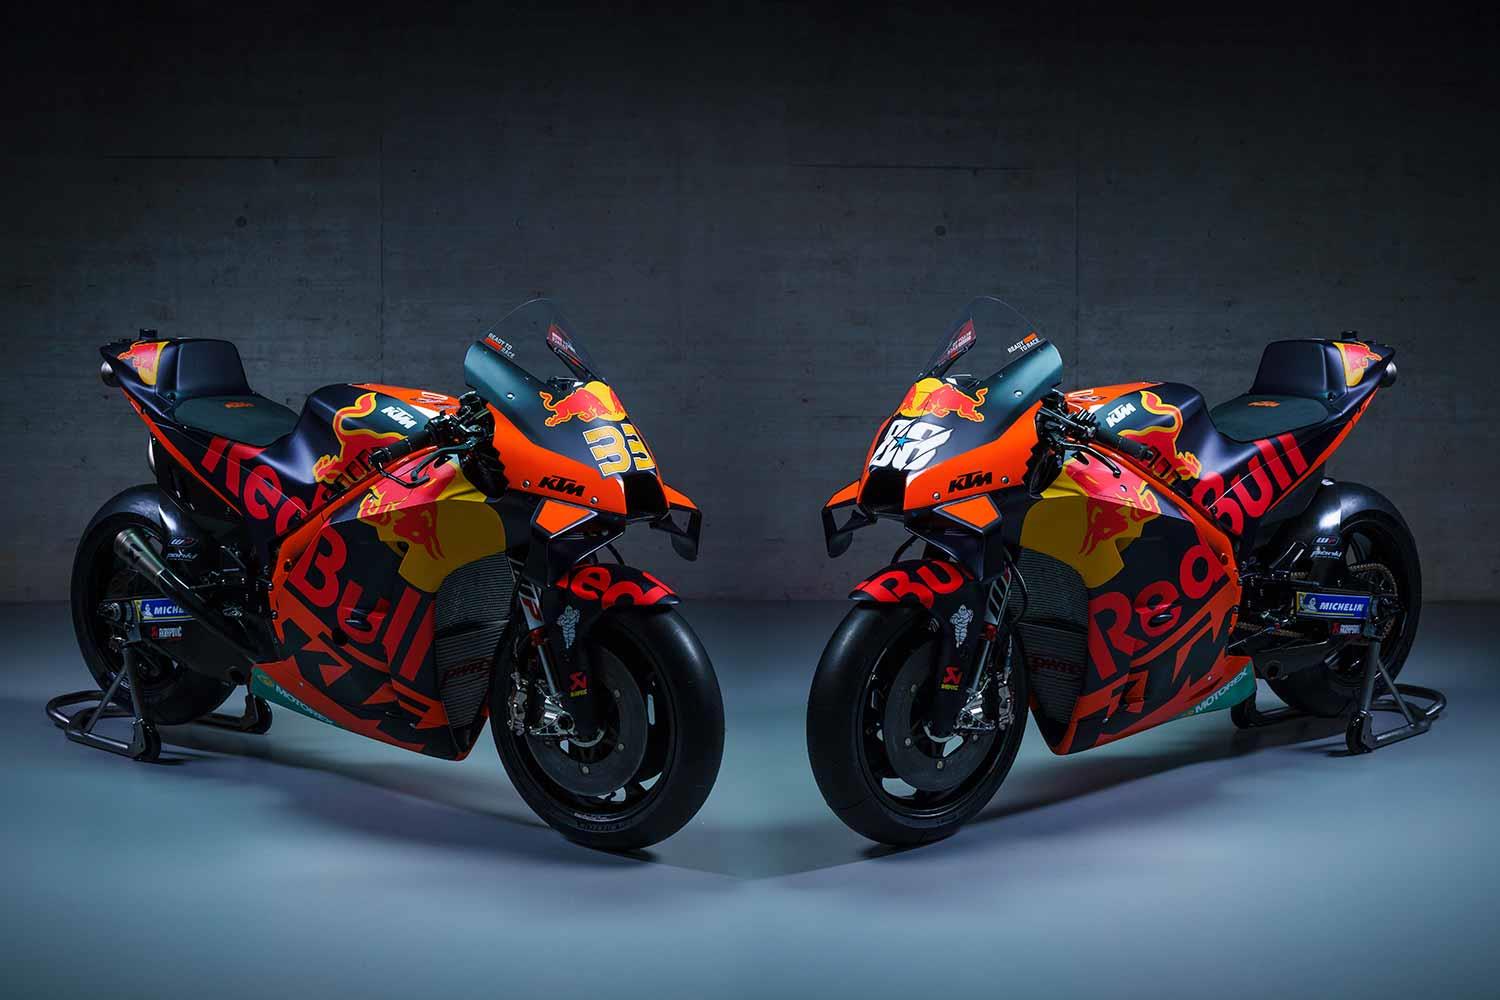 MotoGP: KTM reveal their 2021 livery | MCN